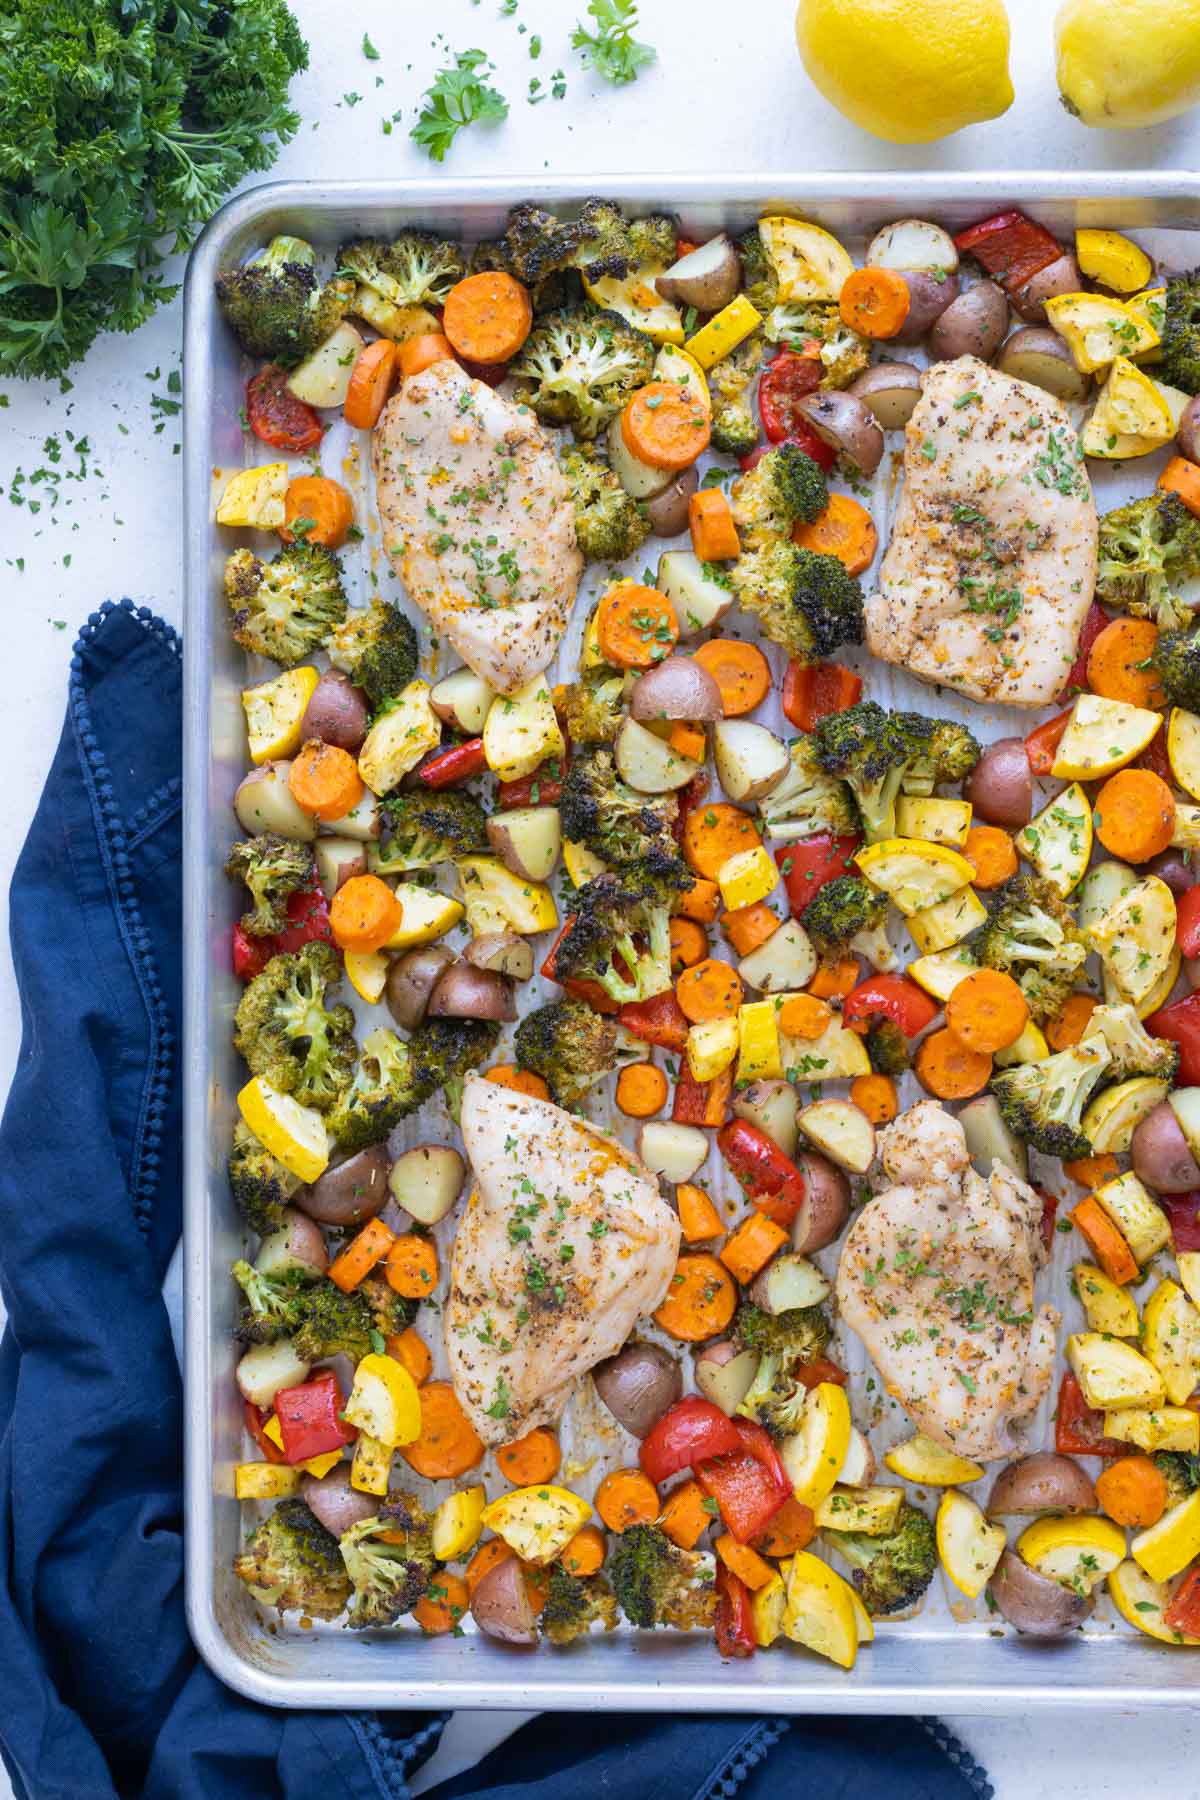 A pan full of seasoned chicken and veggies.